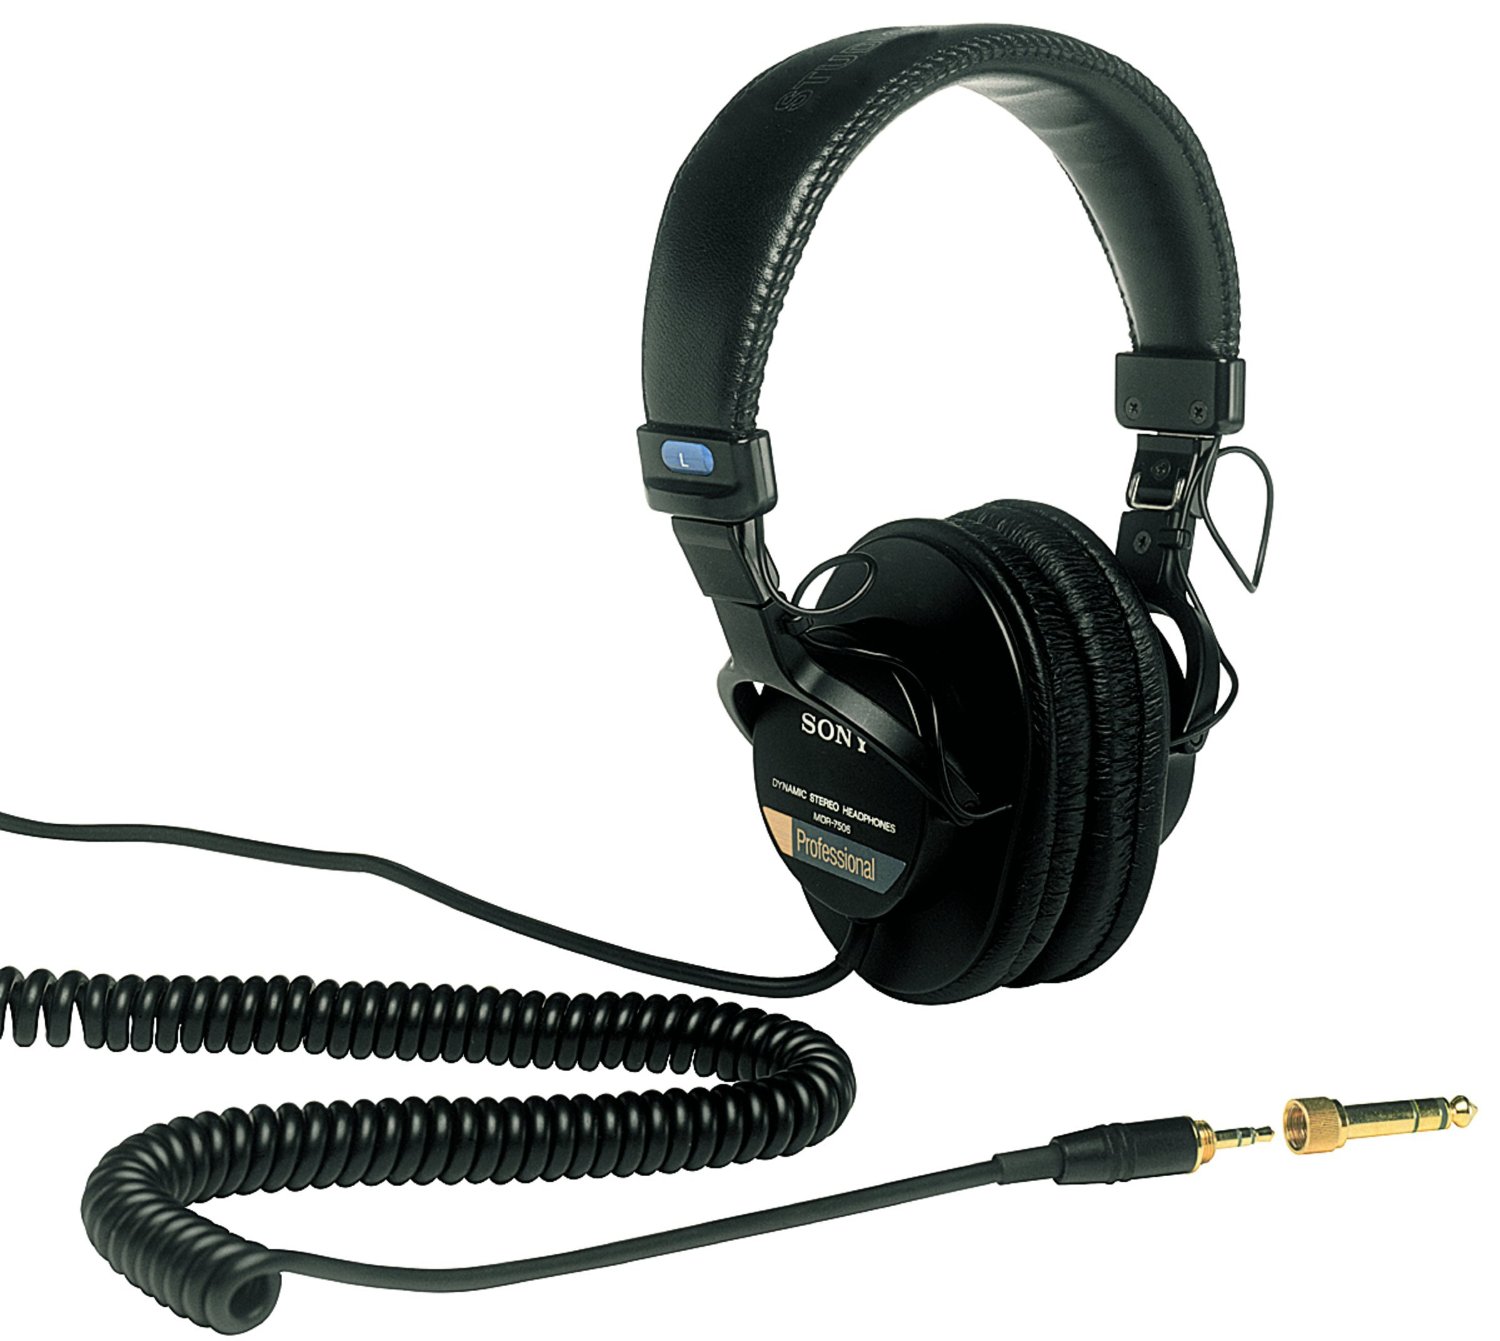 Review: Sony MDR7506 Studio Headphones